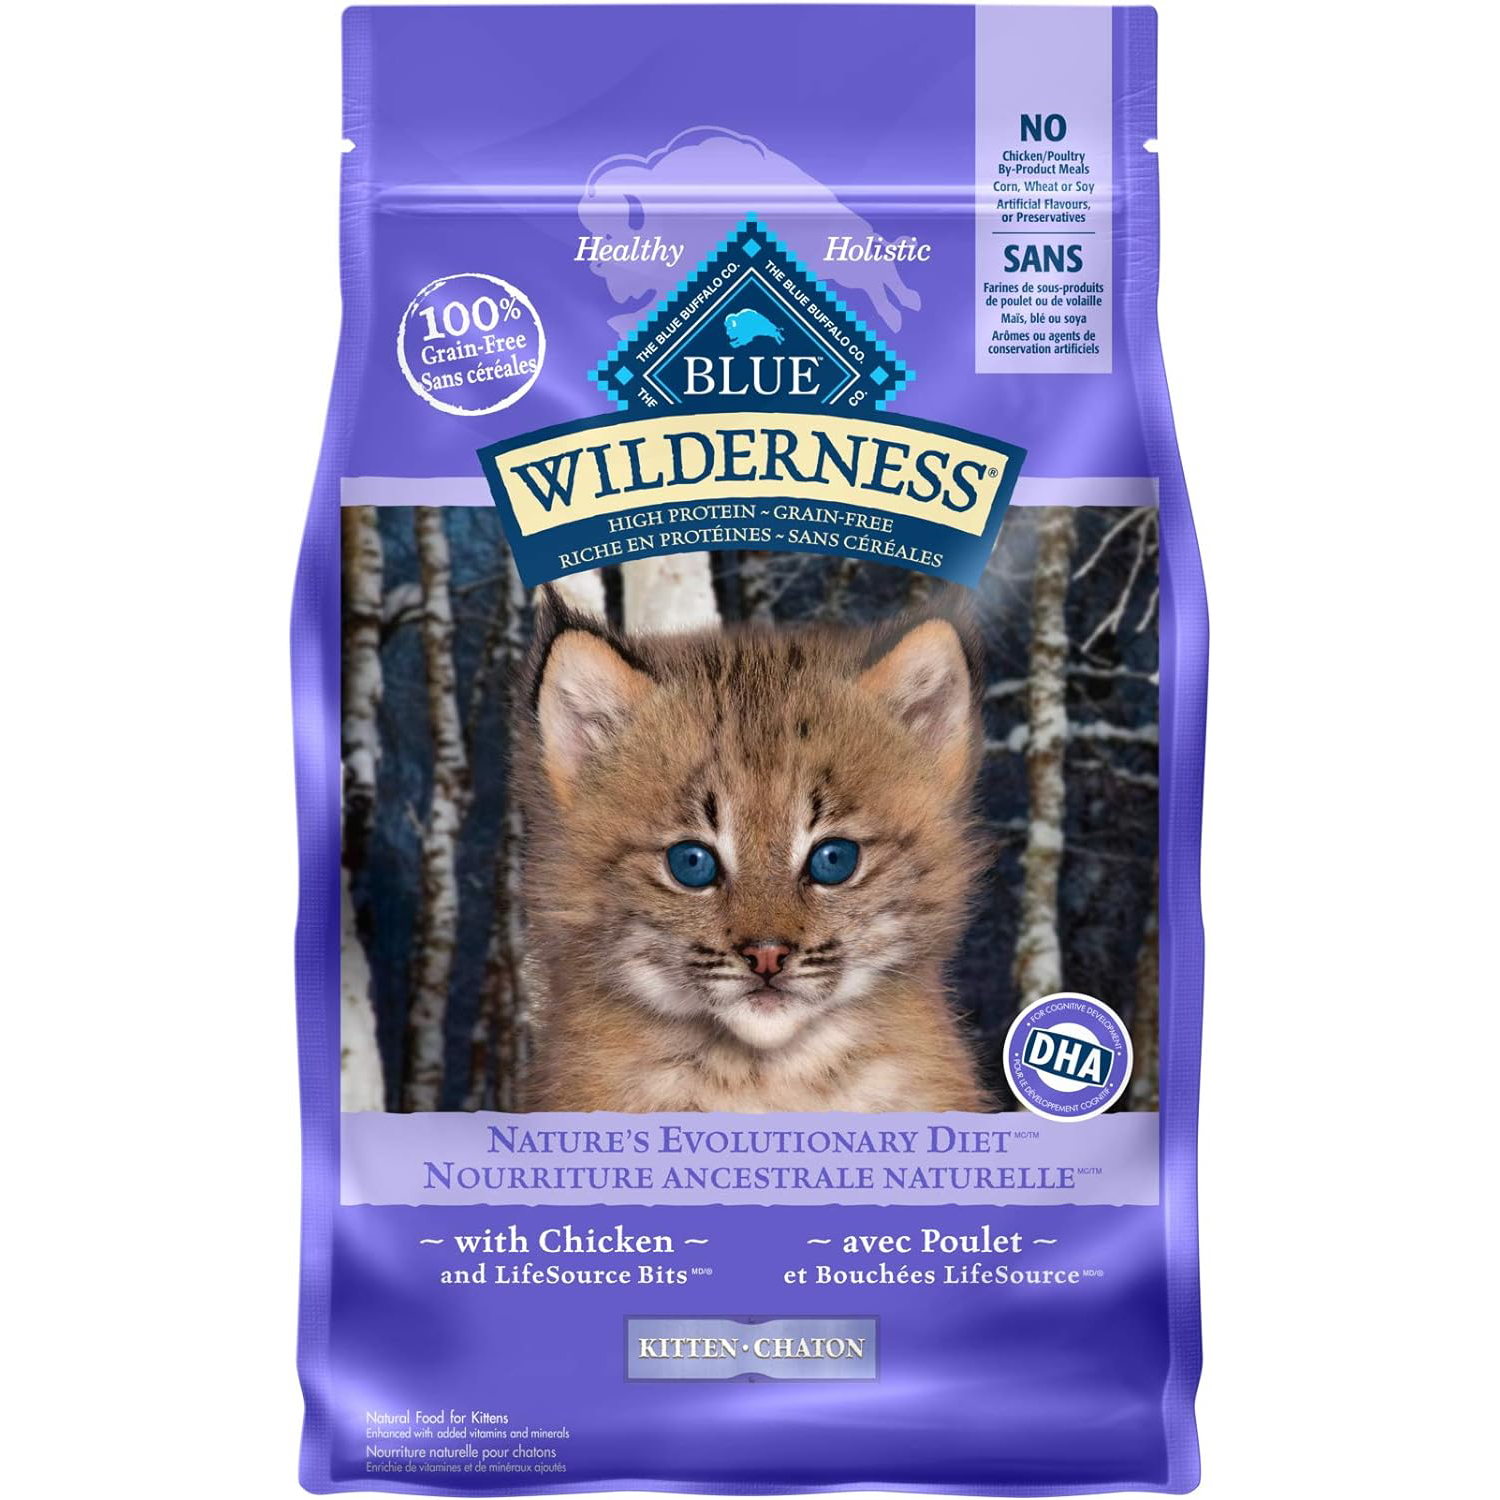 Blue Buffalo Wilderness High Protein Grain Free Natural Kitten Dry Cat Food